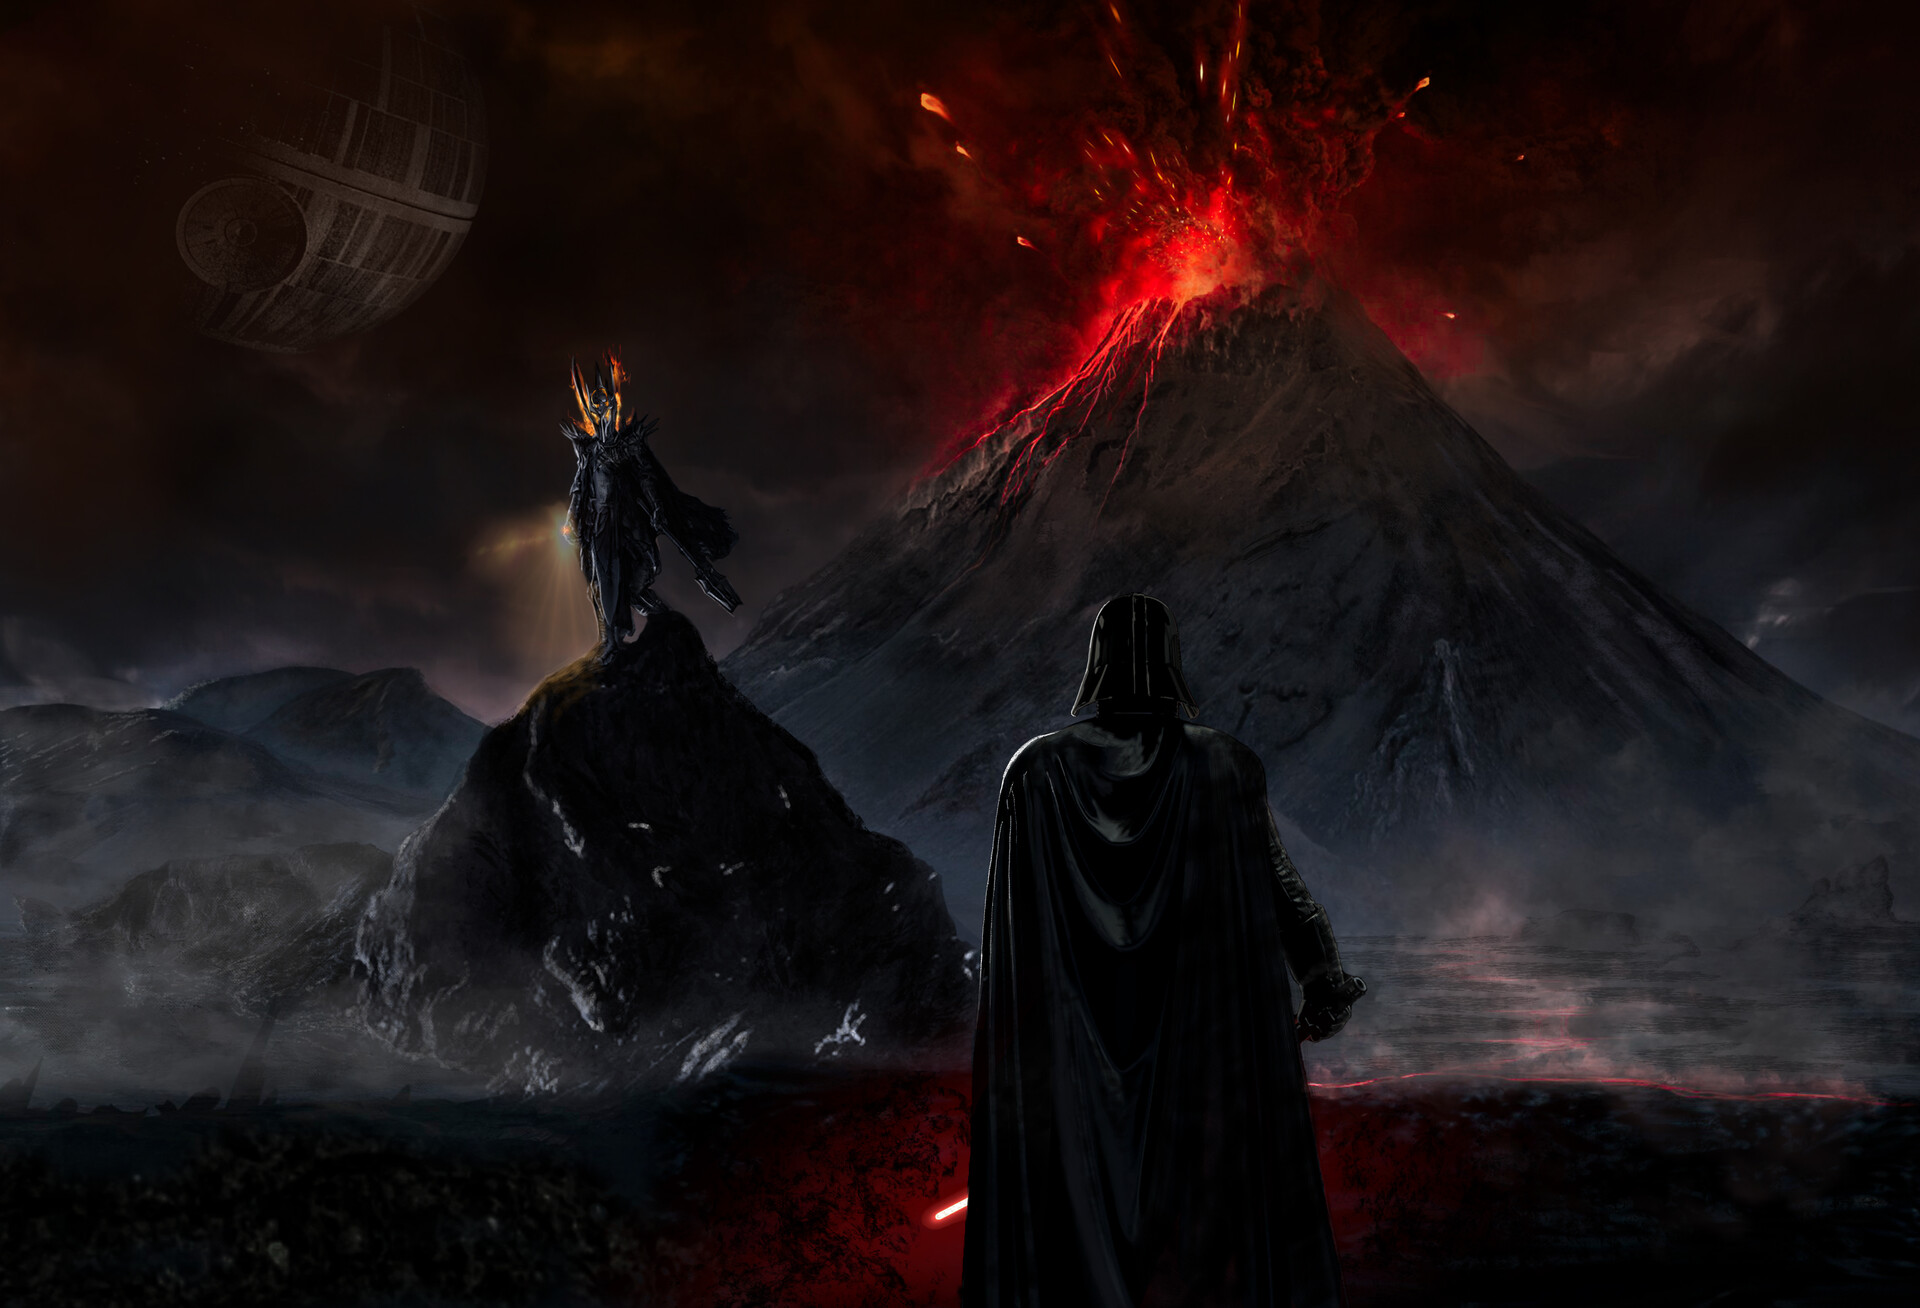 Darth Vader Vs Sauron